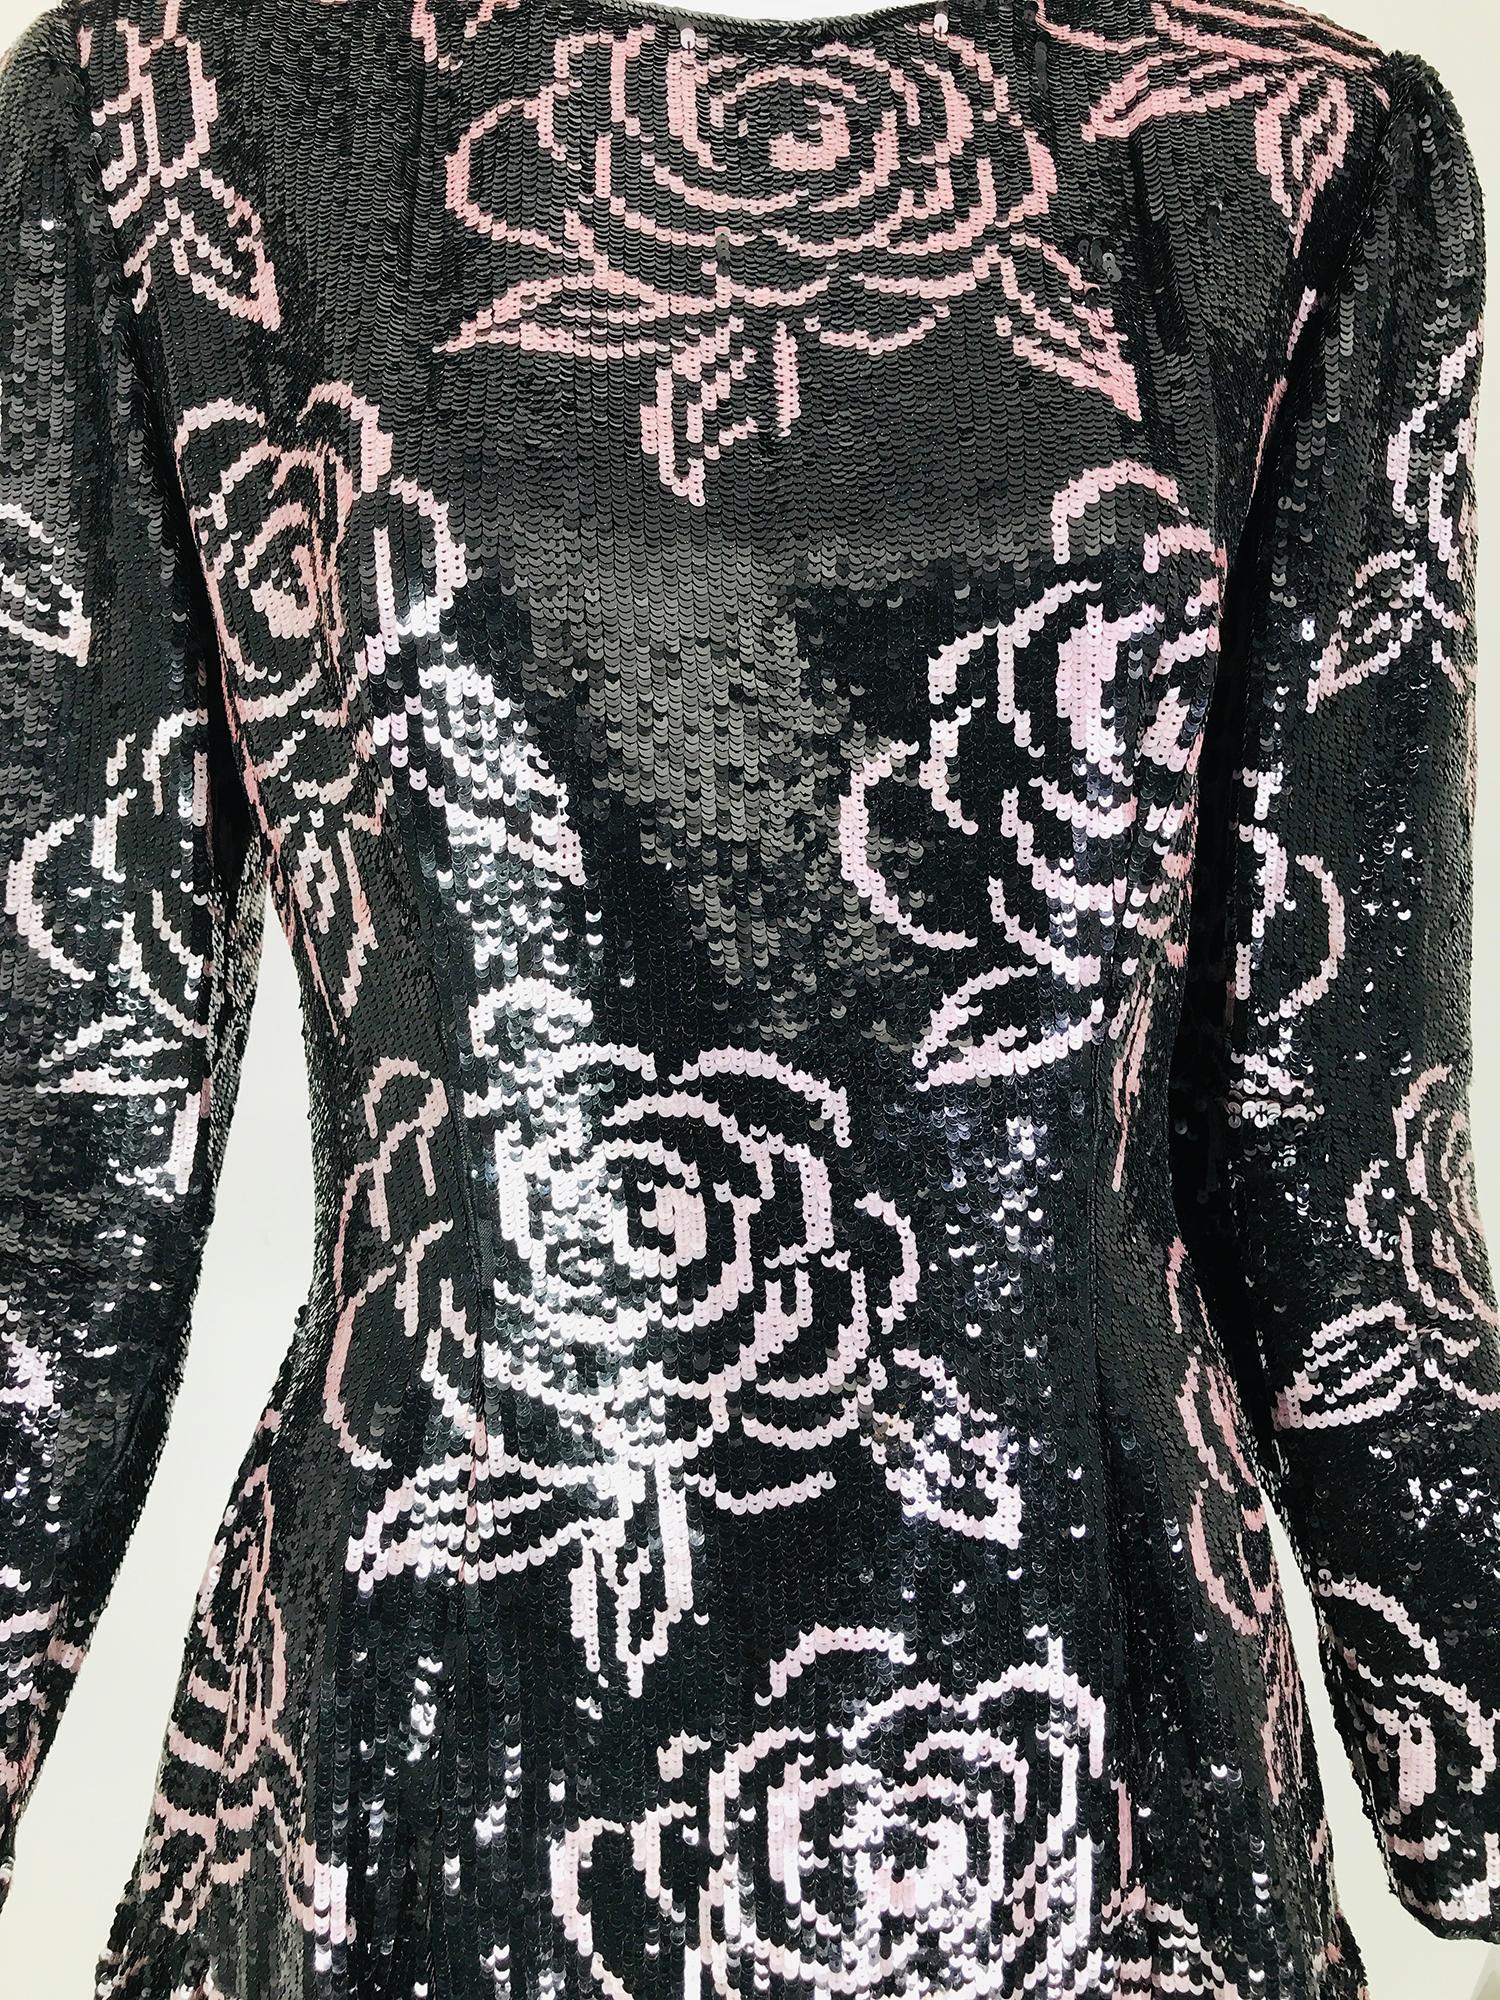 Oscar de la Renta Black & Pink Sequin Encrusted Roses Evening Dress 1980s 9